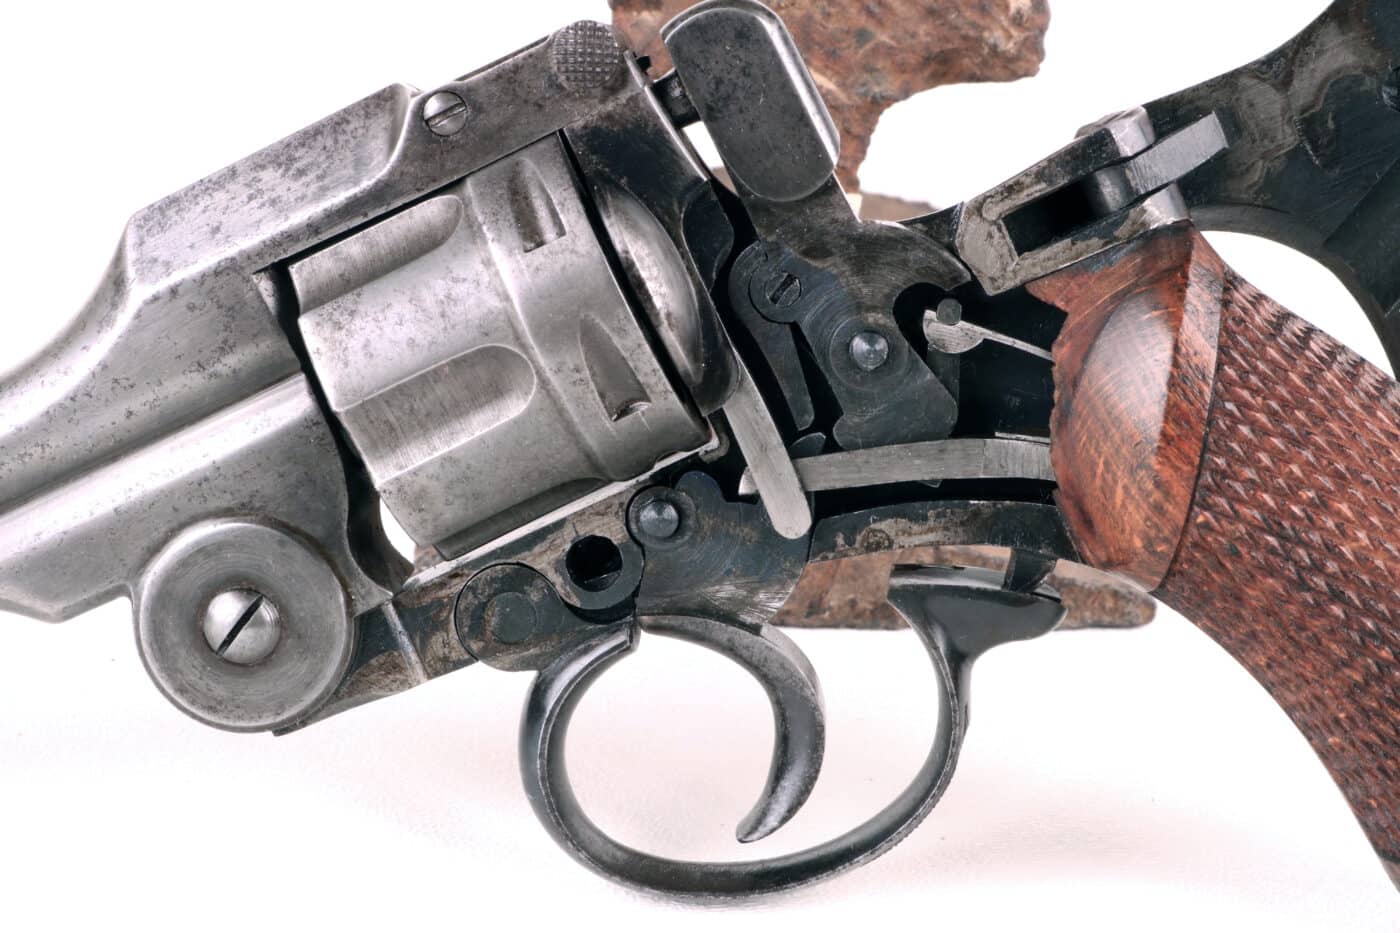 internal clockwork of Type 26 revolver